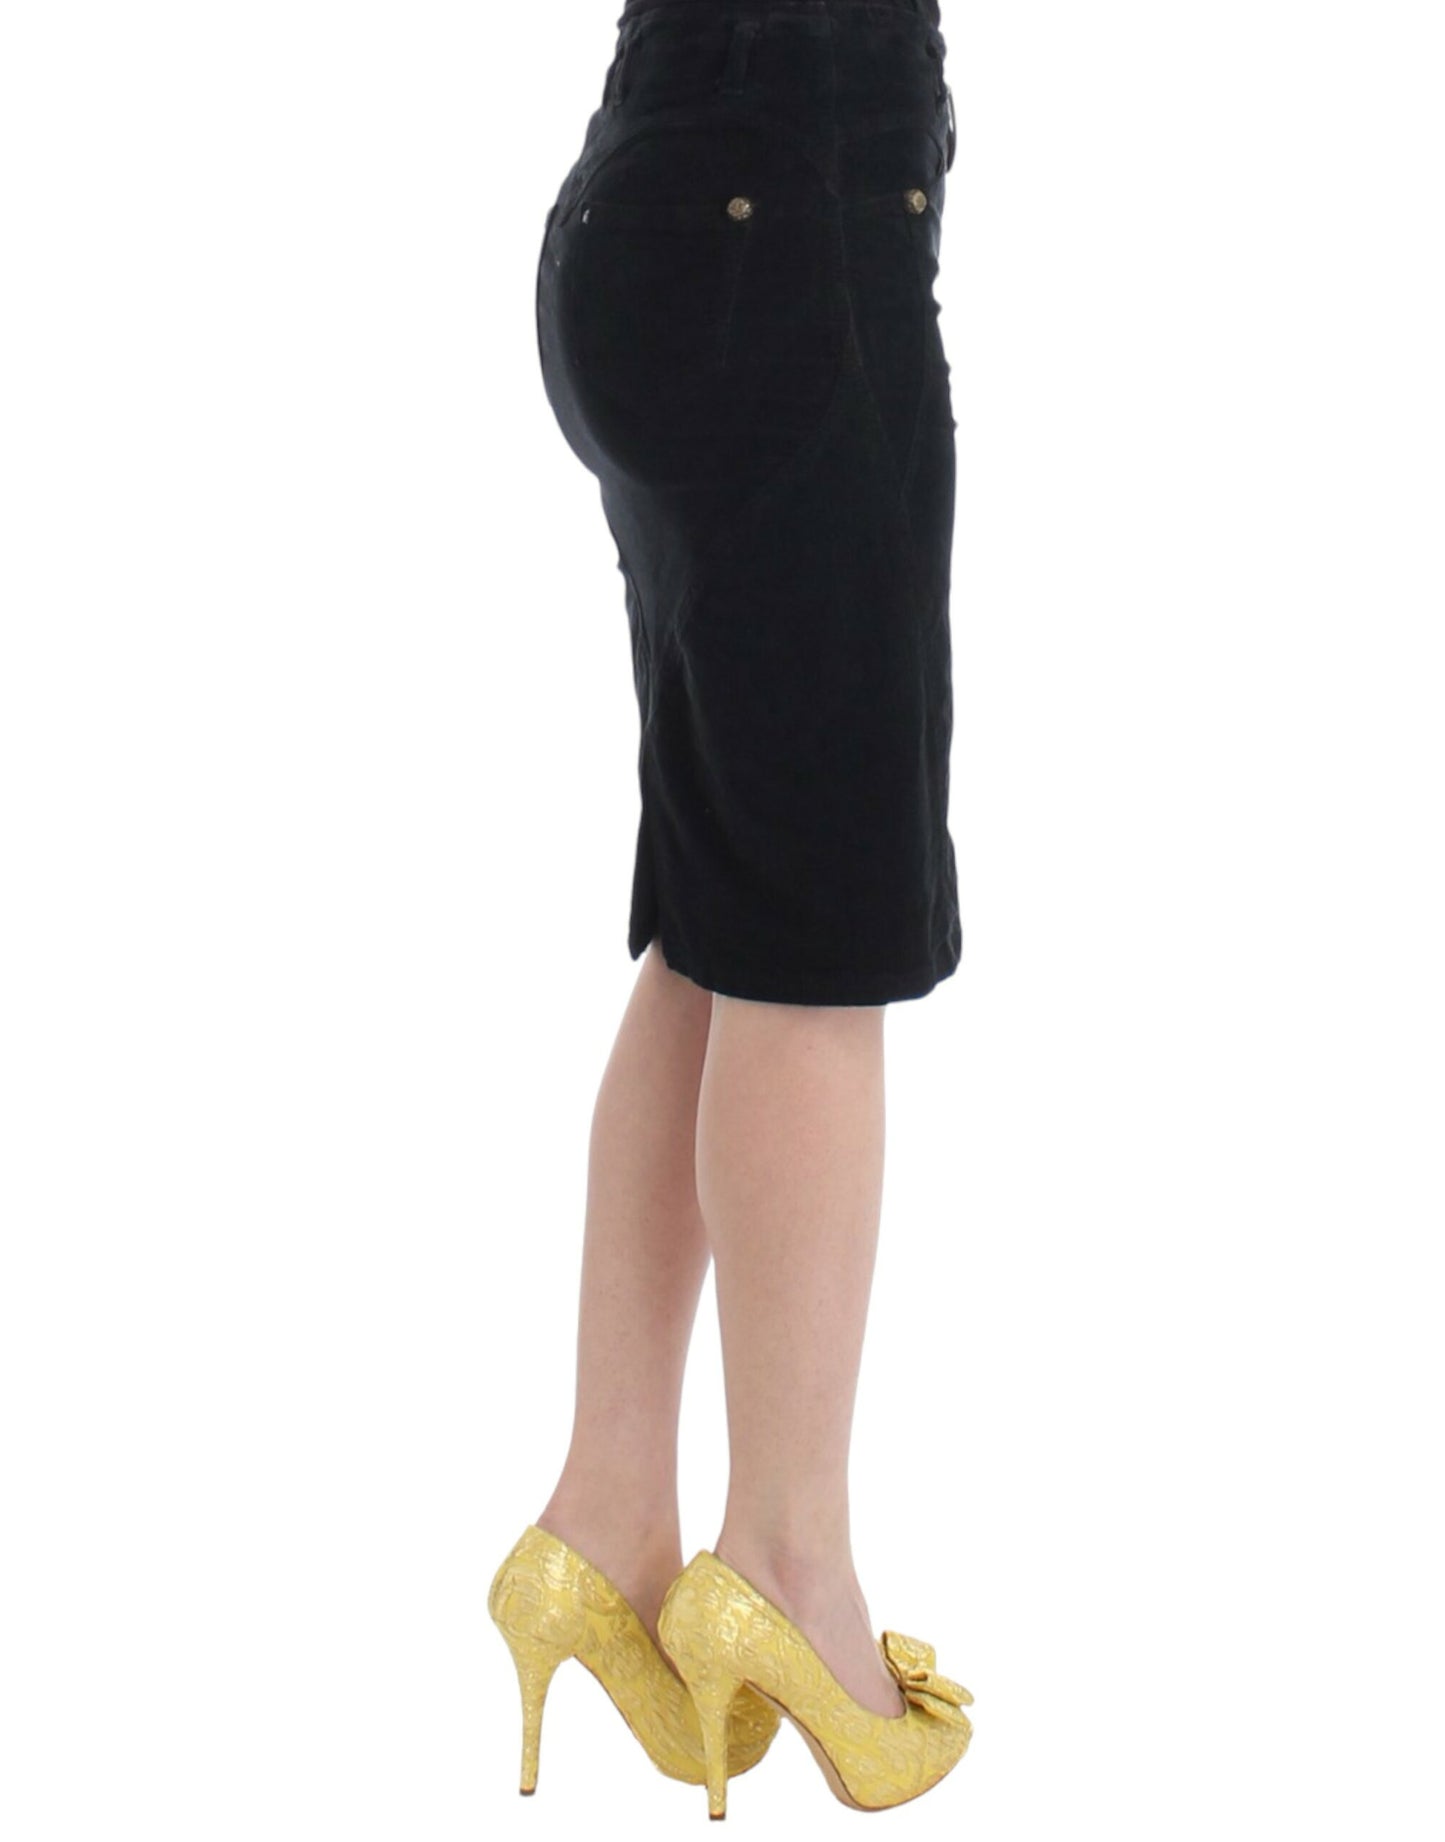 Elegant Black Pencil Skirt for Sophisticated Style